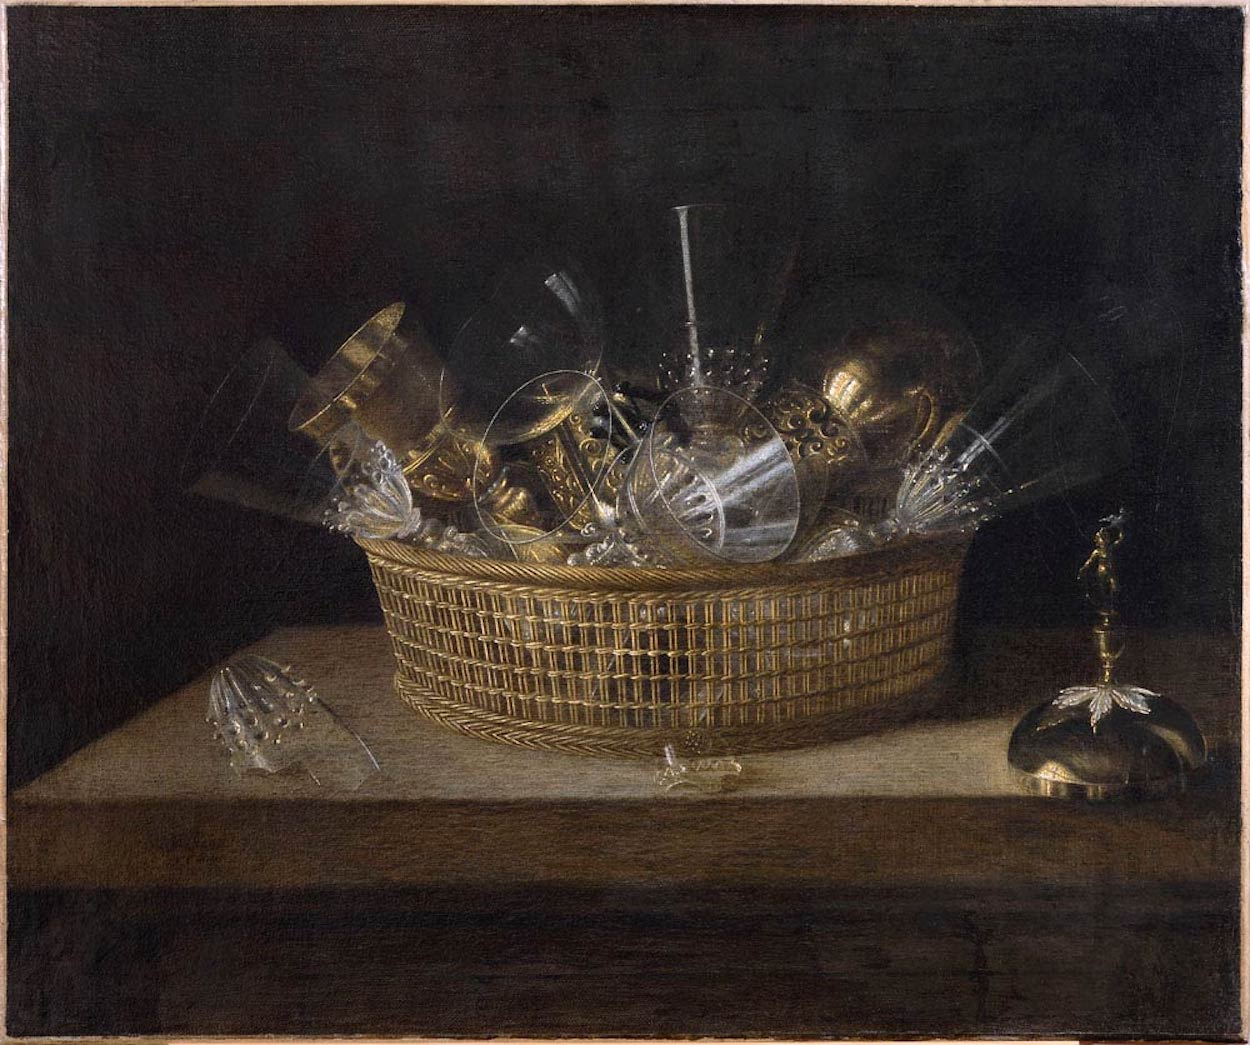 Bardaklı Sepet (orig. "Basket with Glasses") by Sébastien Stoskopff - 1644 - 52 x 63 cm 